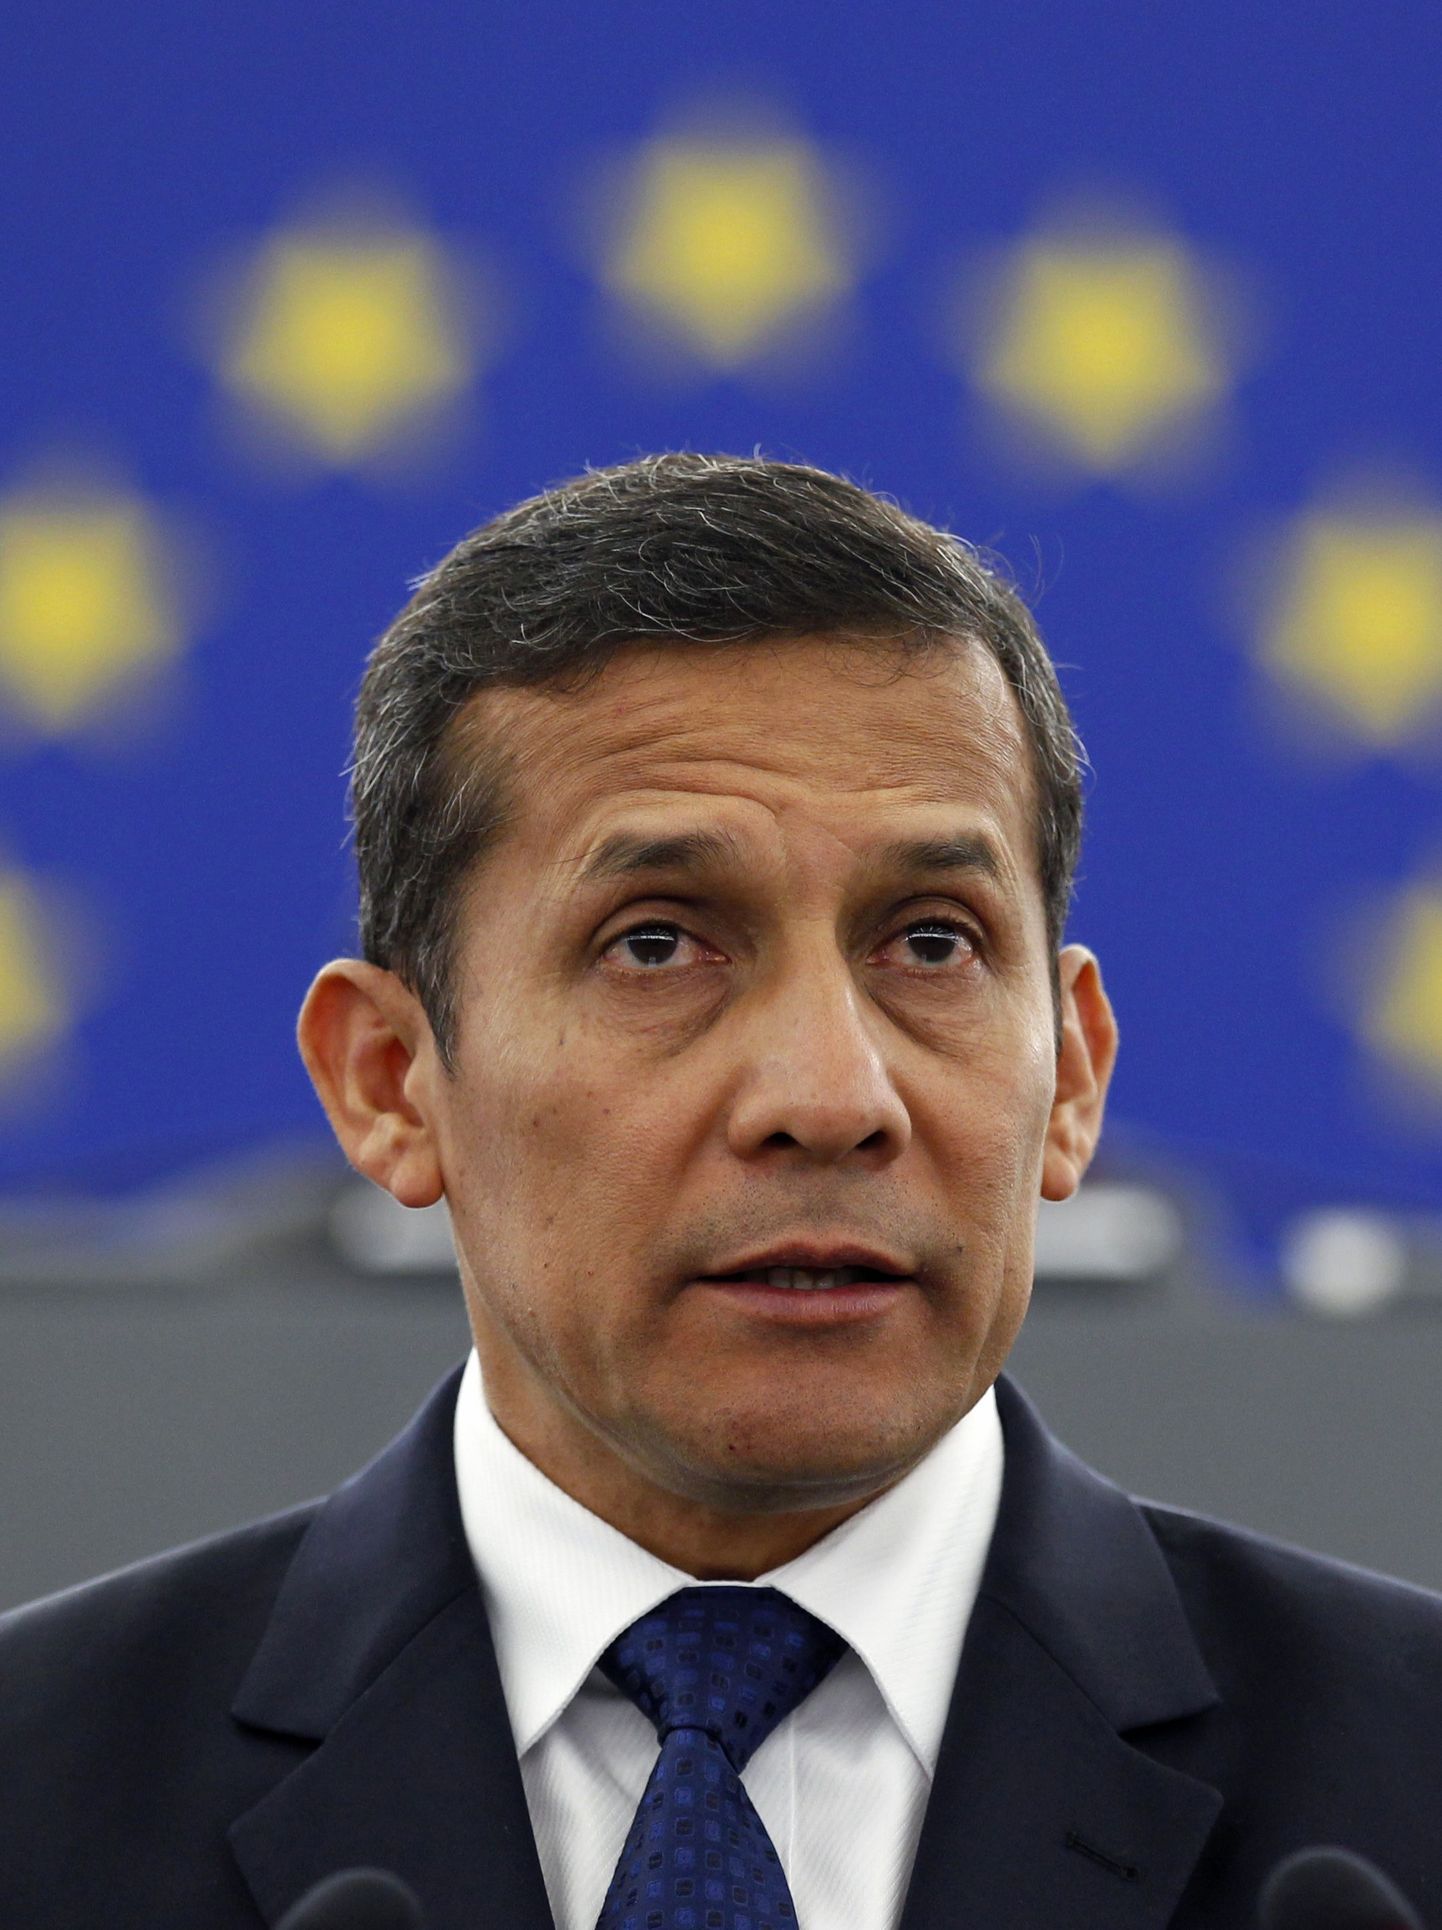 Peruu president Ollanta Humala